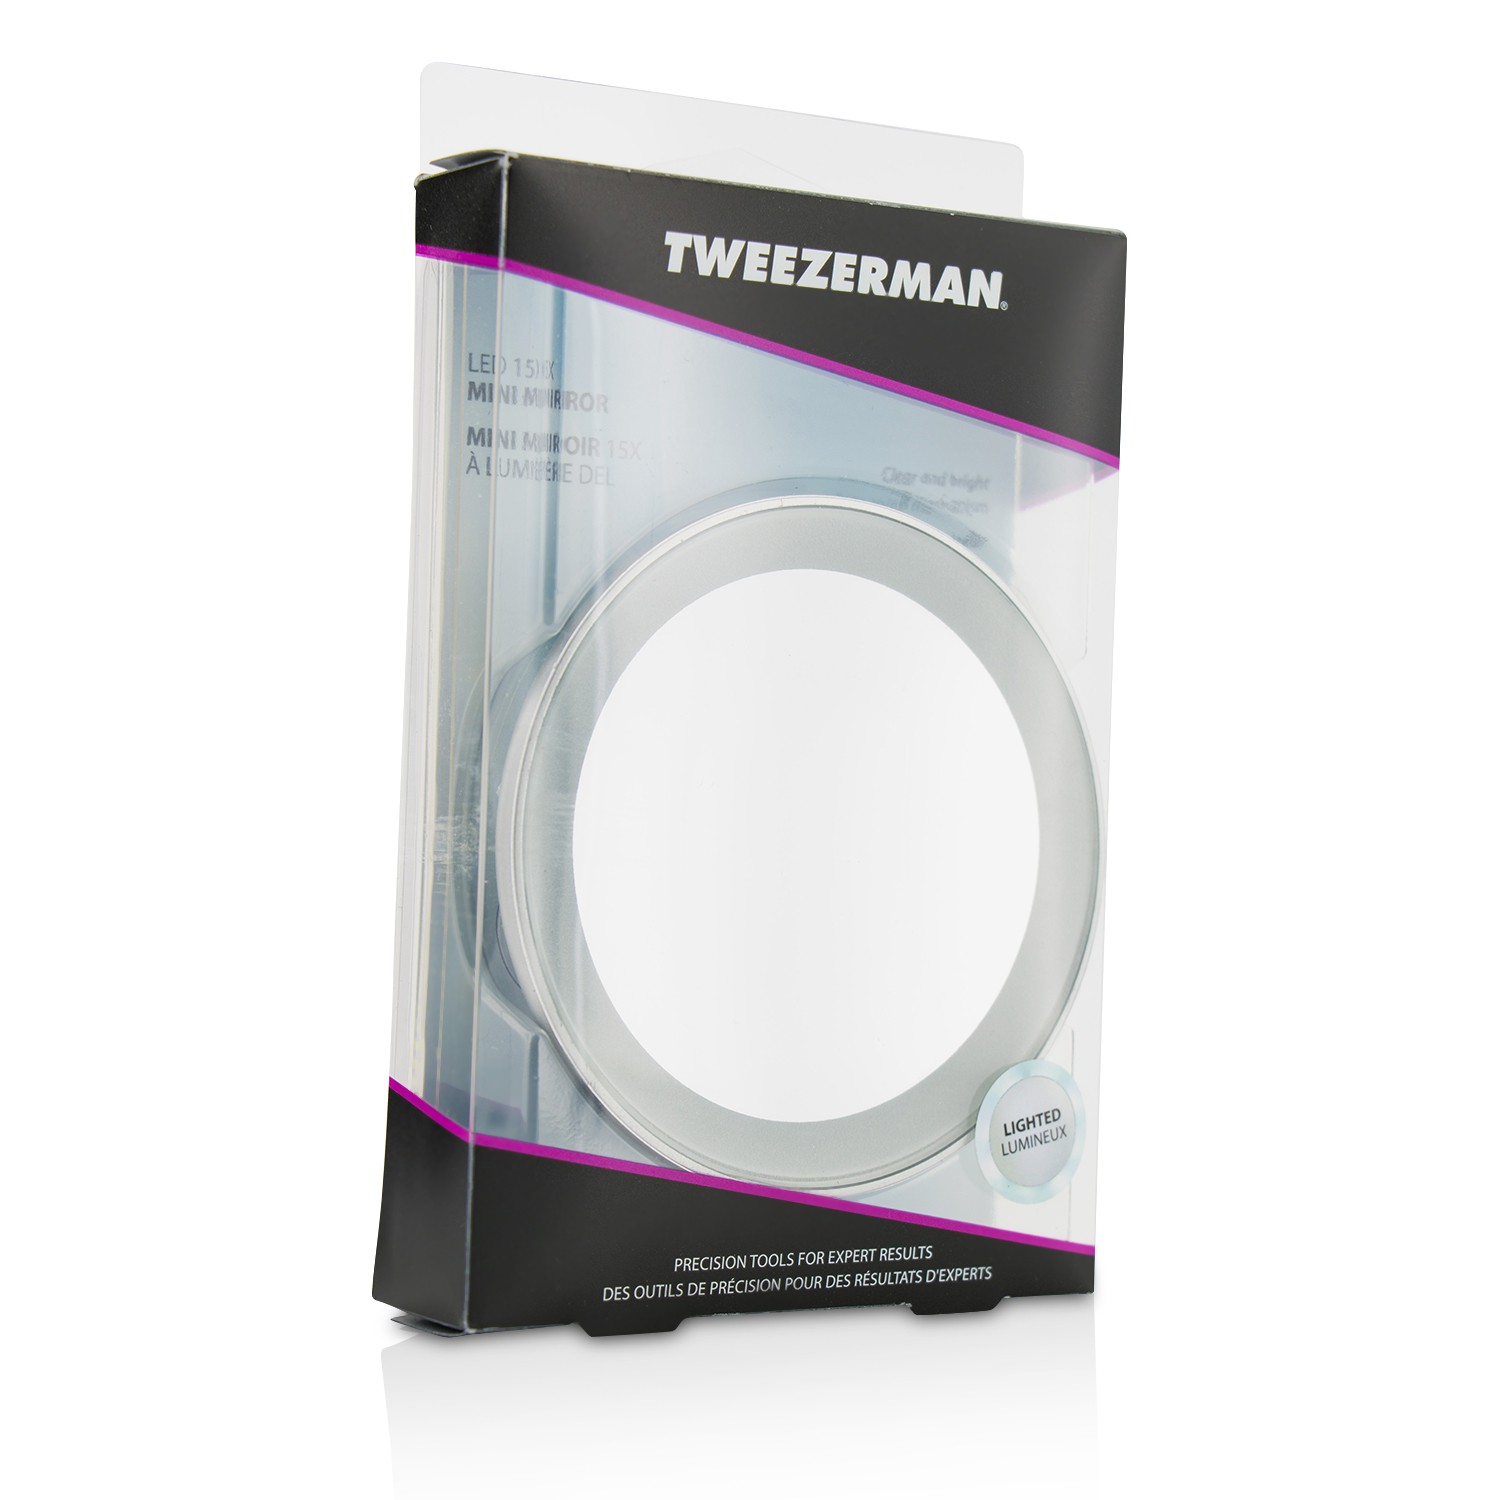 LED 15X Mini Mirror Tweezerman Image